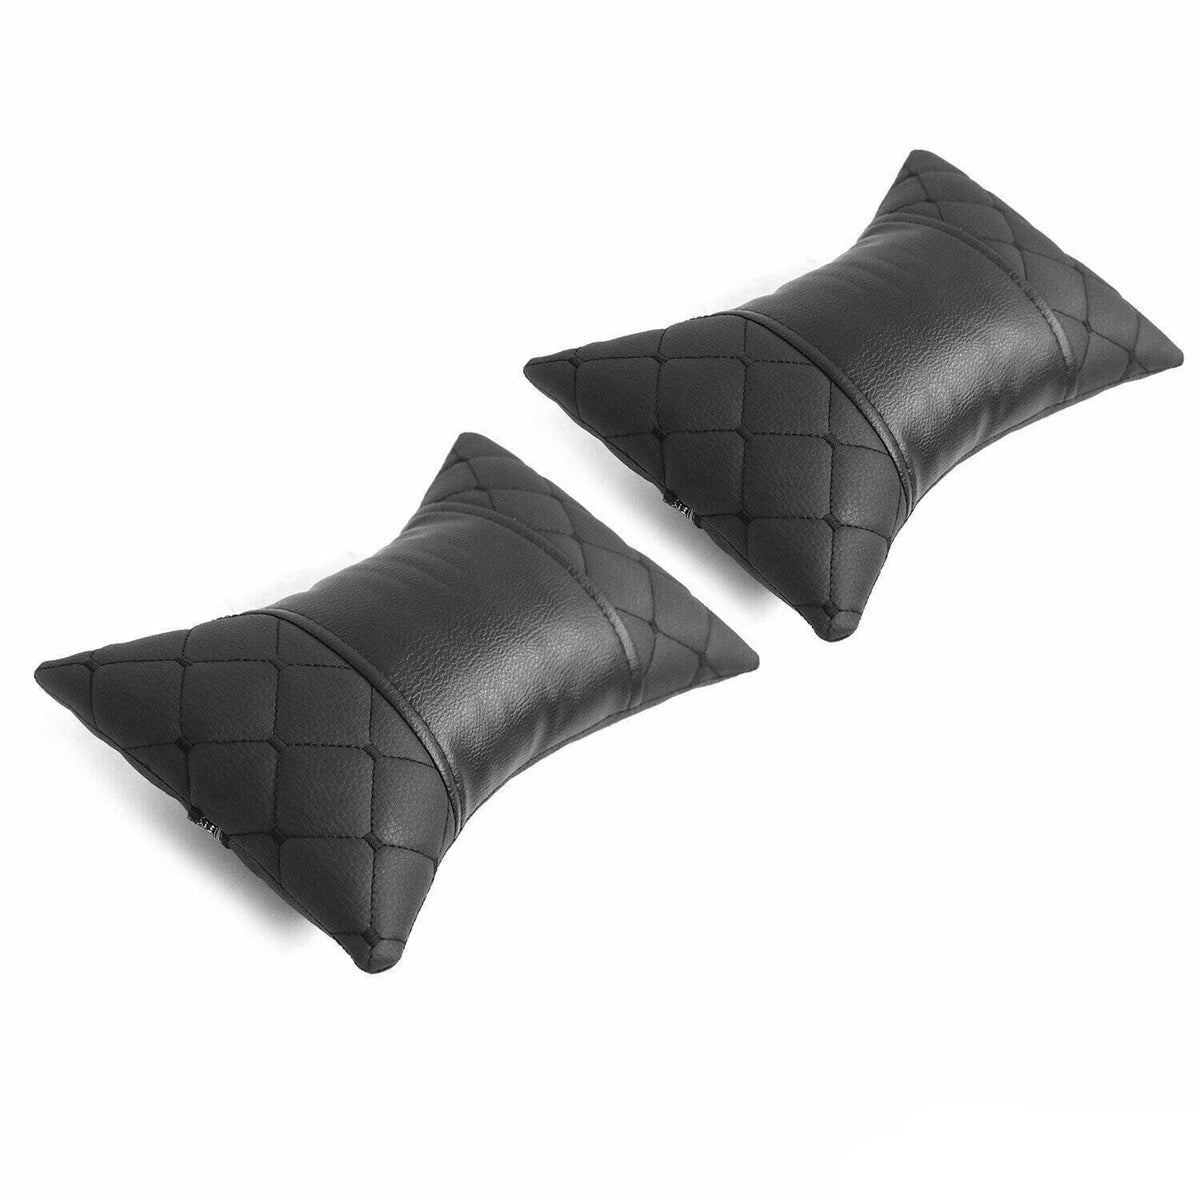 Pack of 2 car headrest, car seat cushion, neck cushion, leather, black, 8 x 30 cm